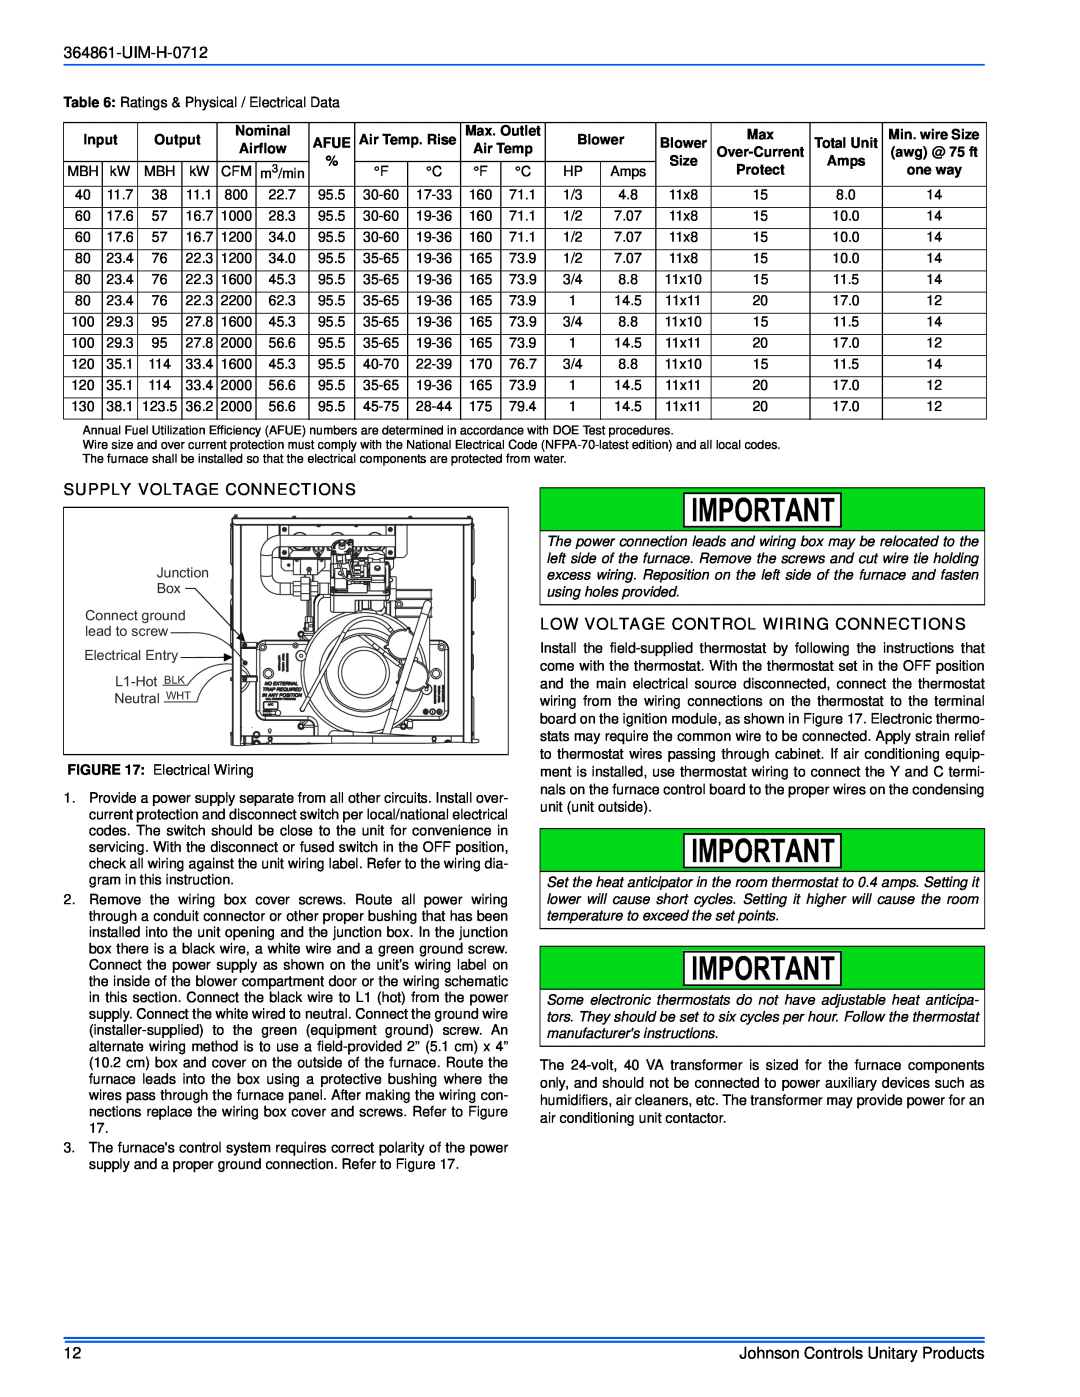 Johnson Controls TG9S'MP UIM-H-0712, Supply Voltage Connections, Low Voltage Control Wiring Connections, Input, Output 